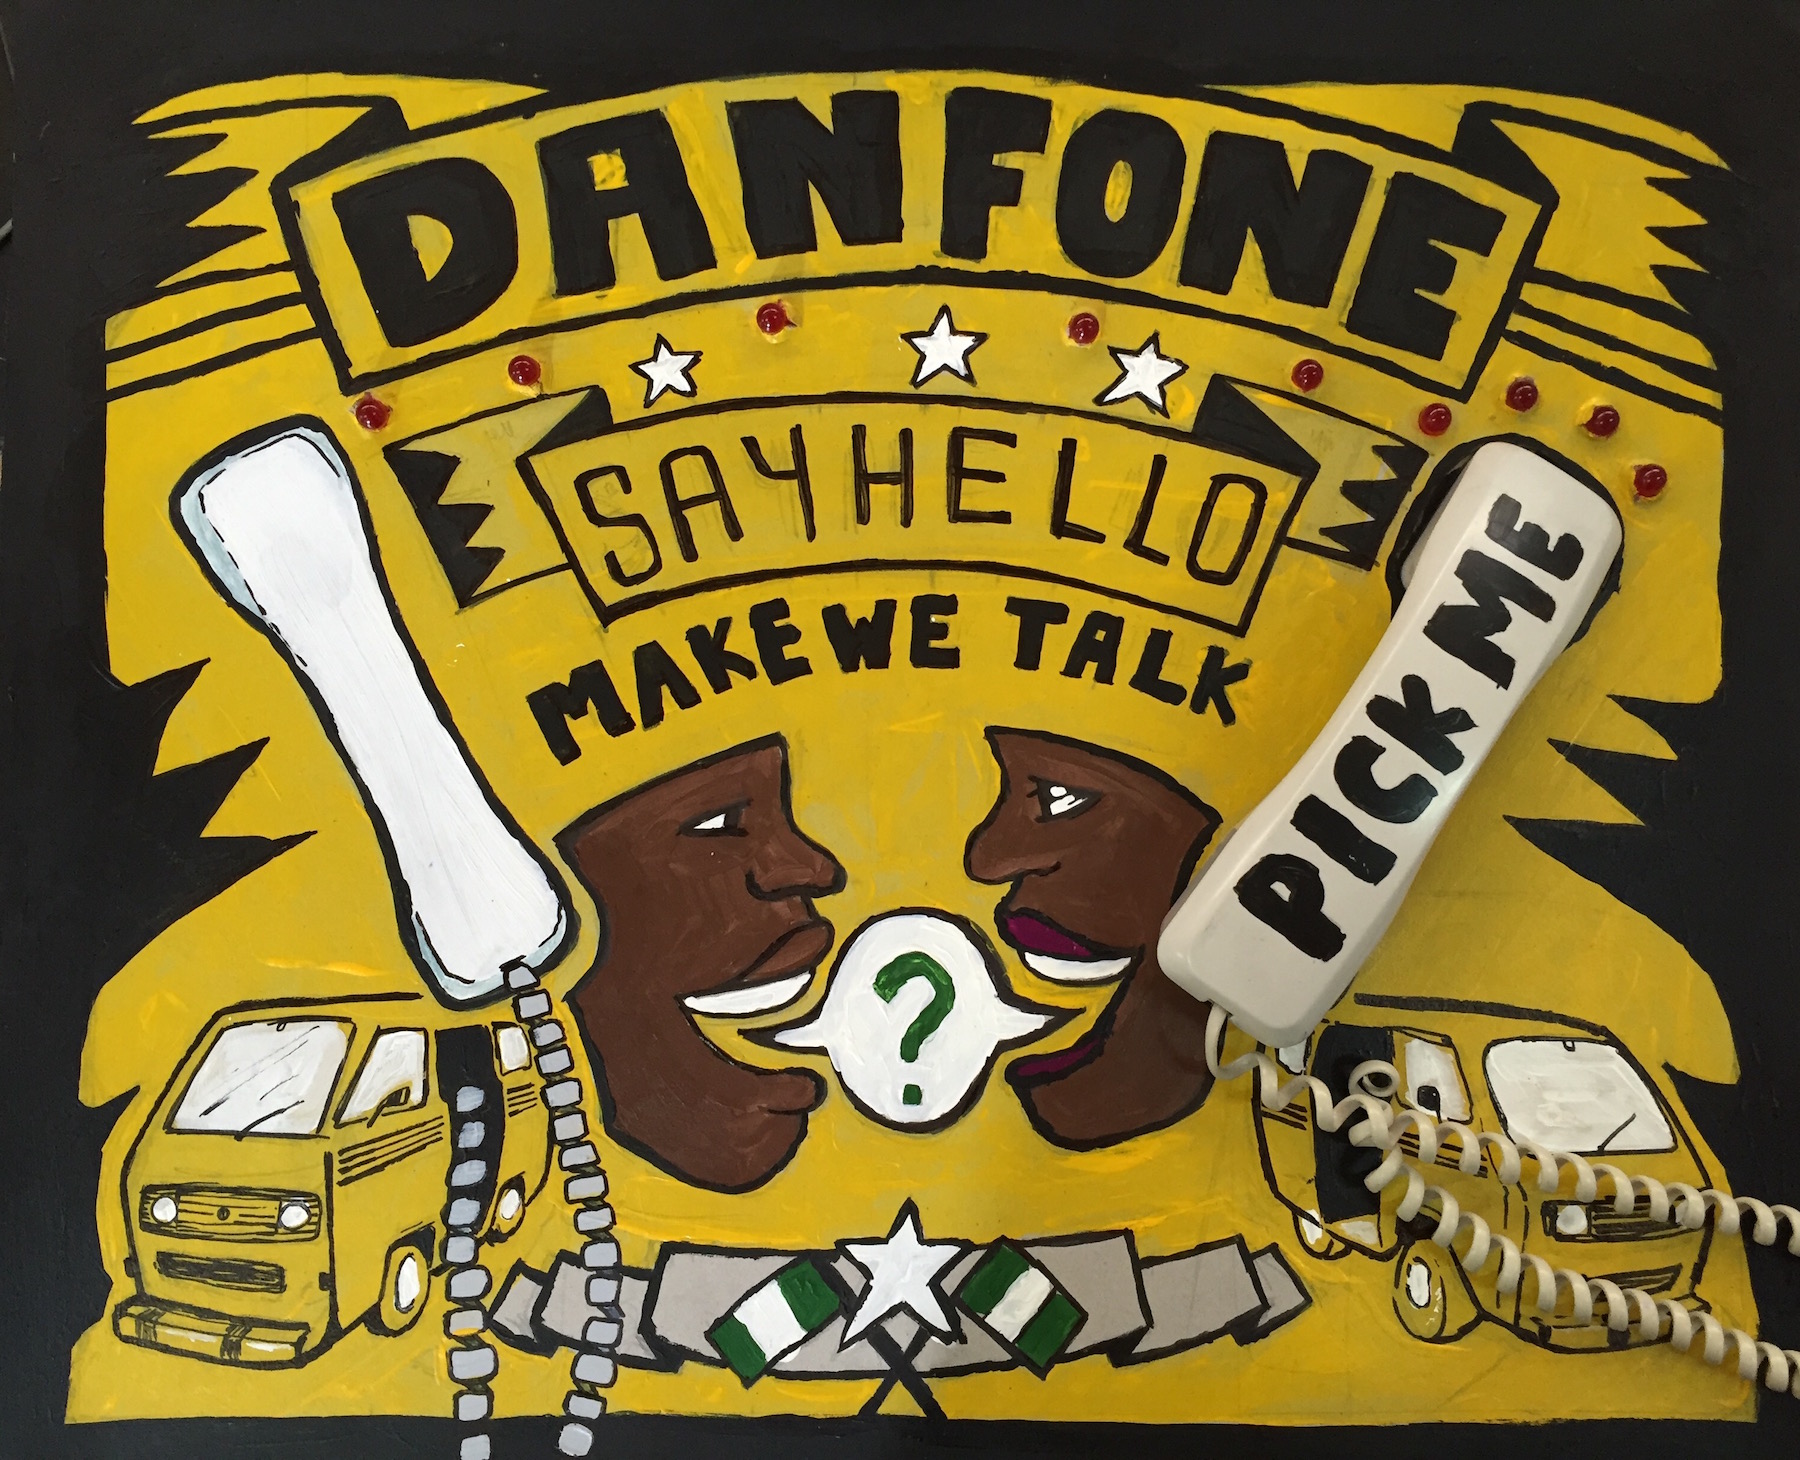 Danfone